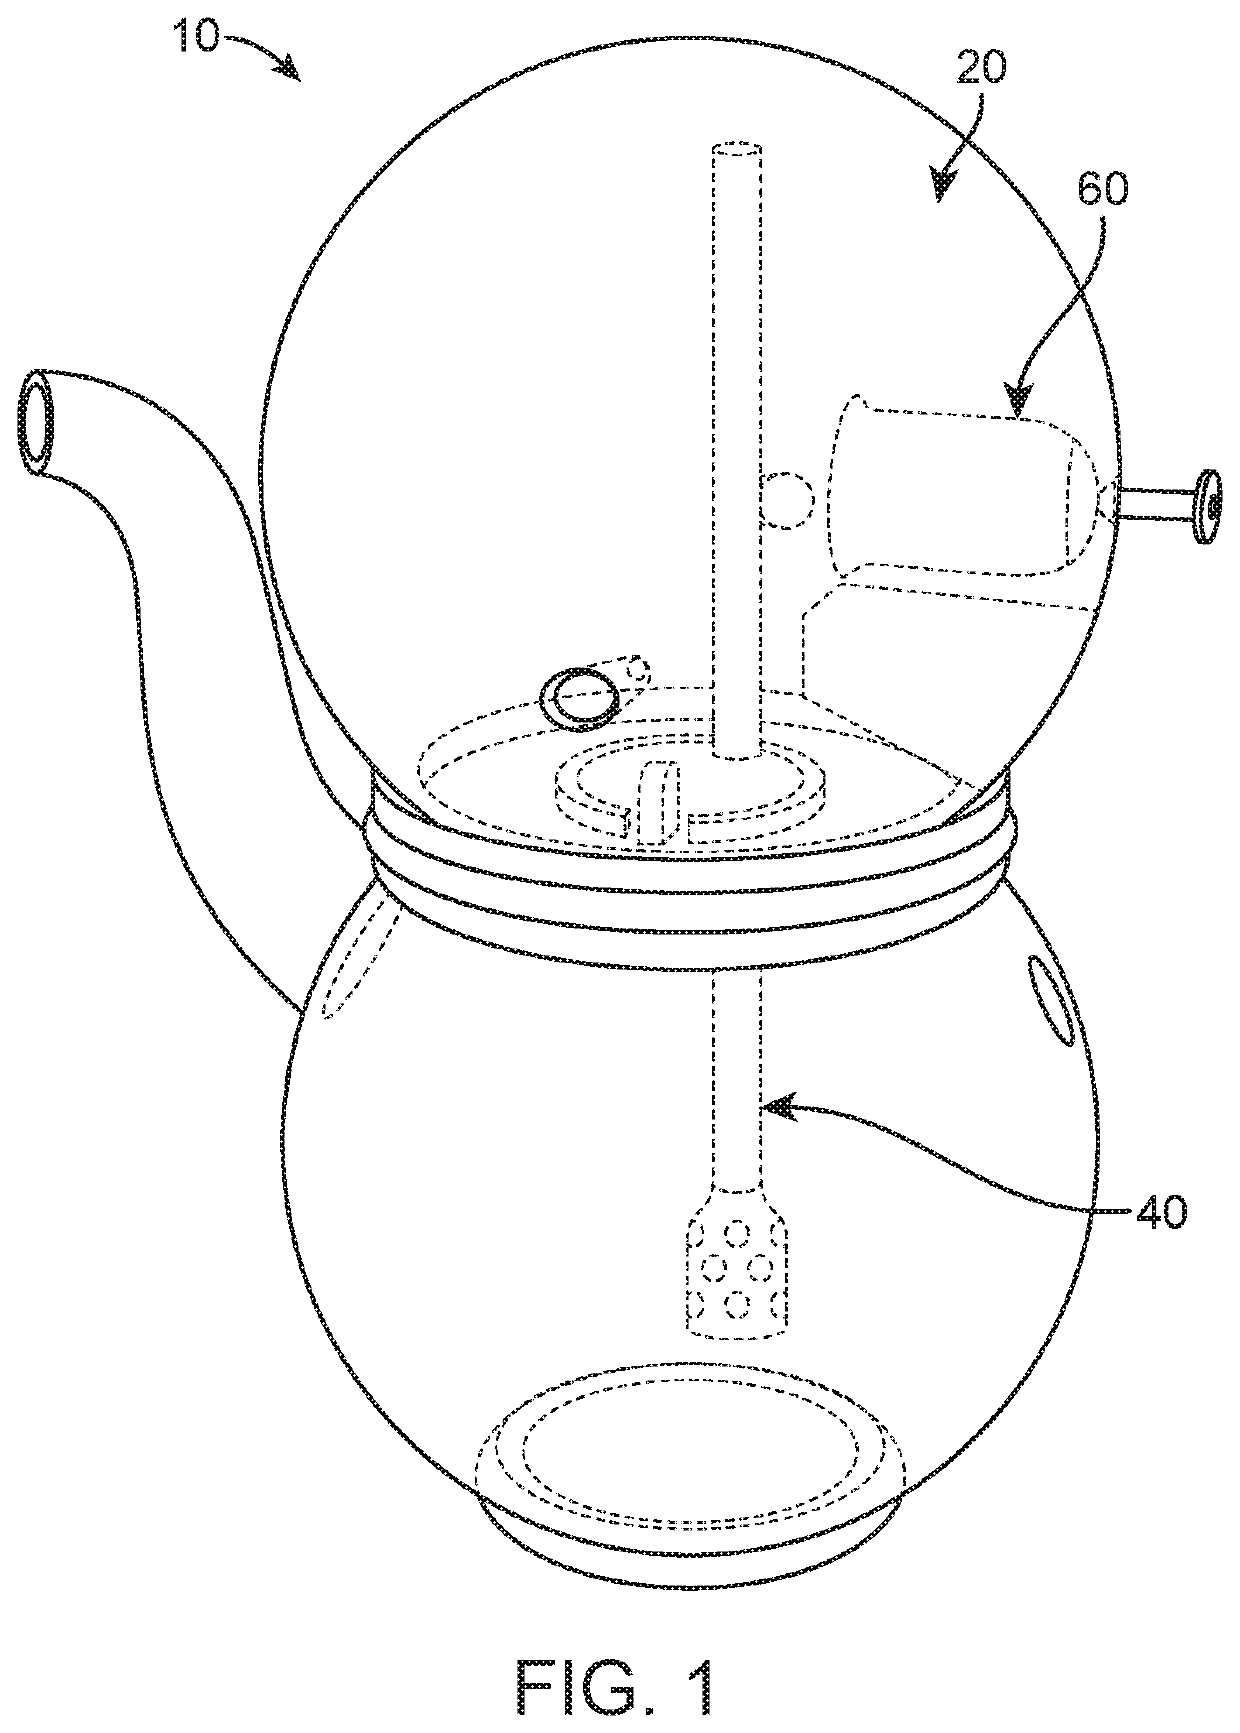 Kief diffusion apparatus and product